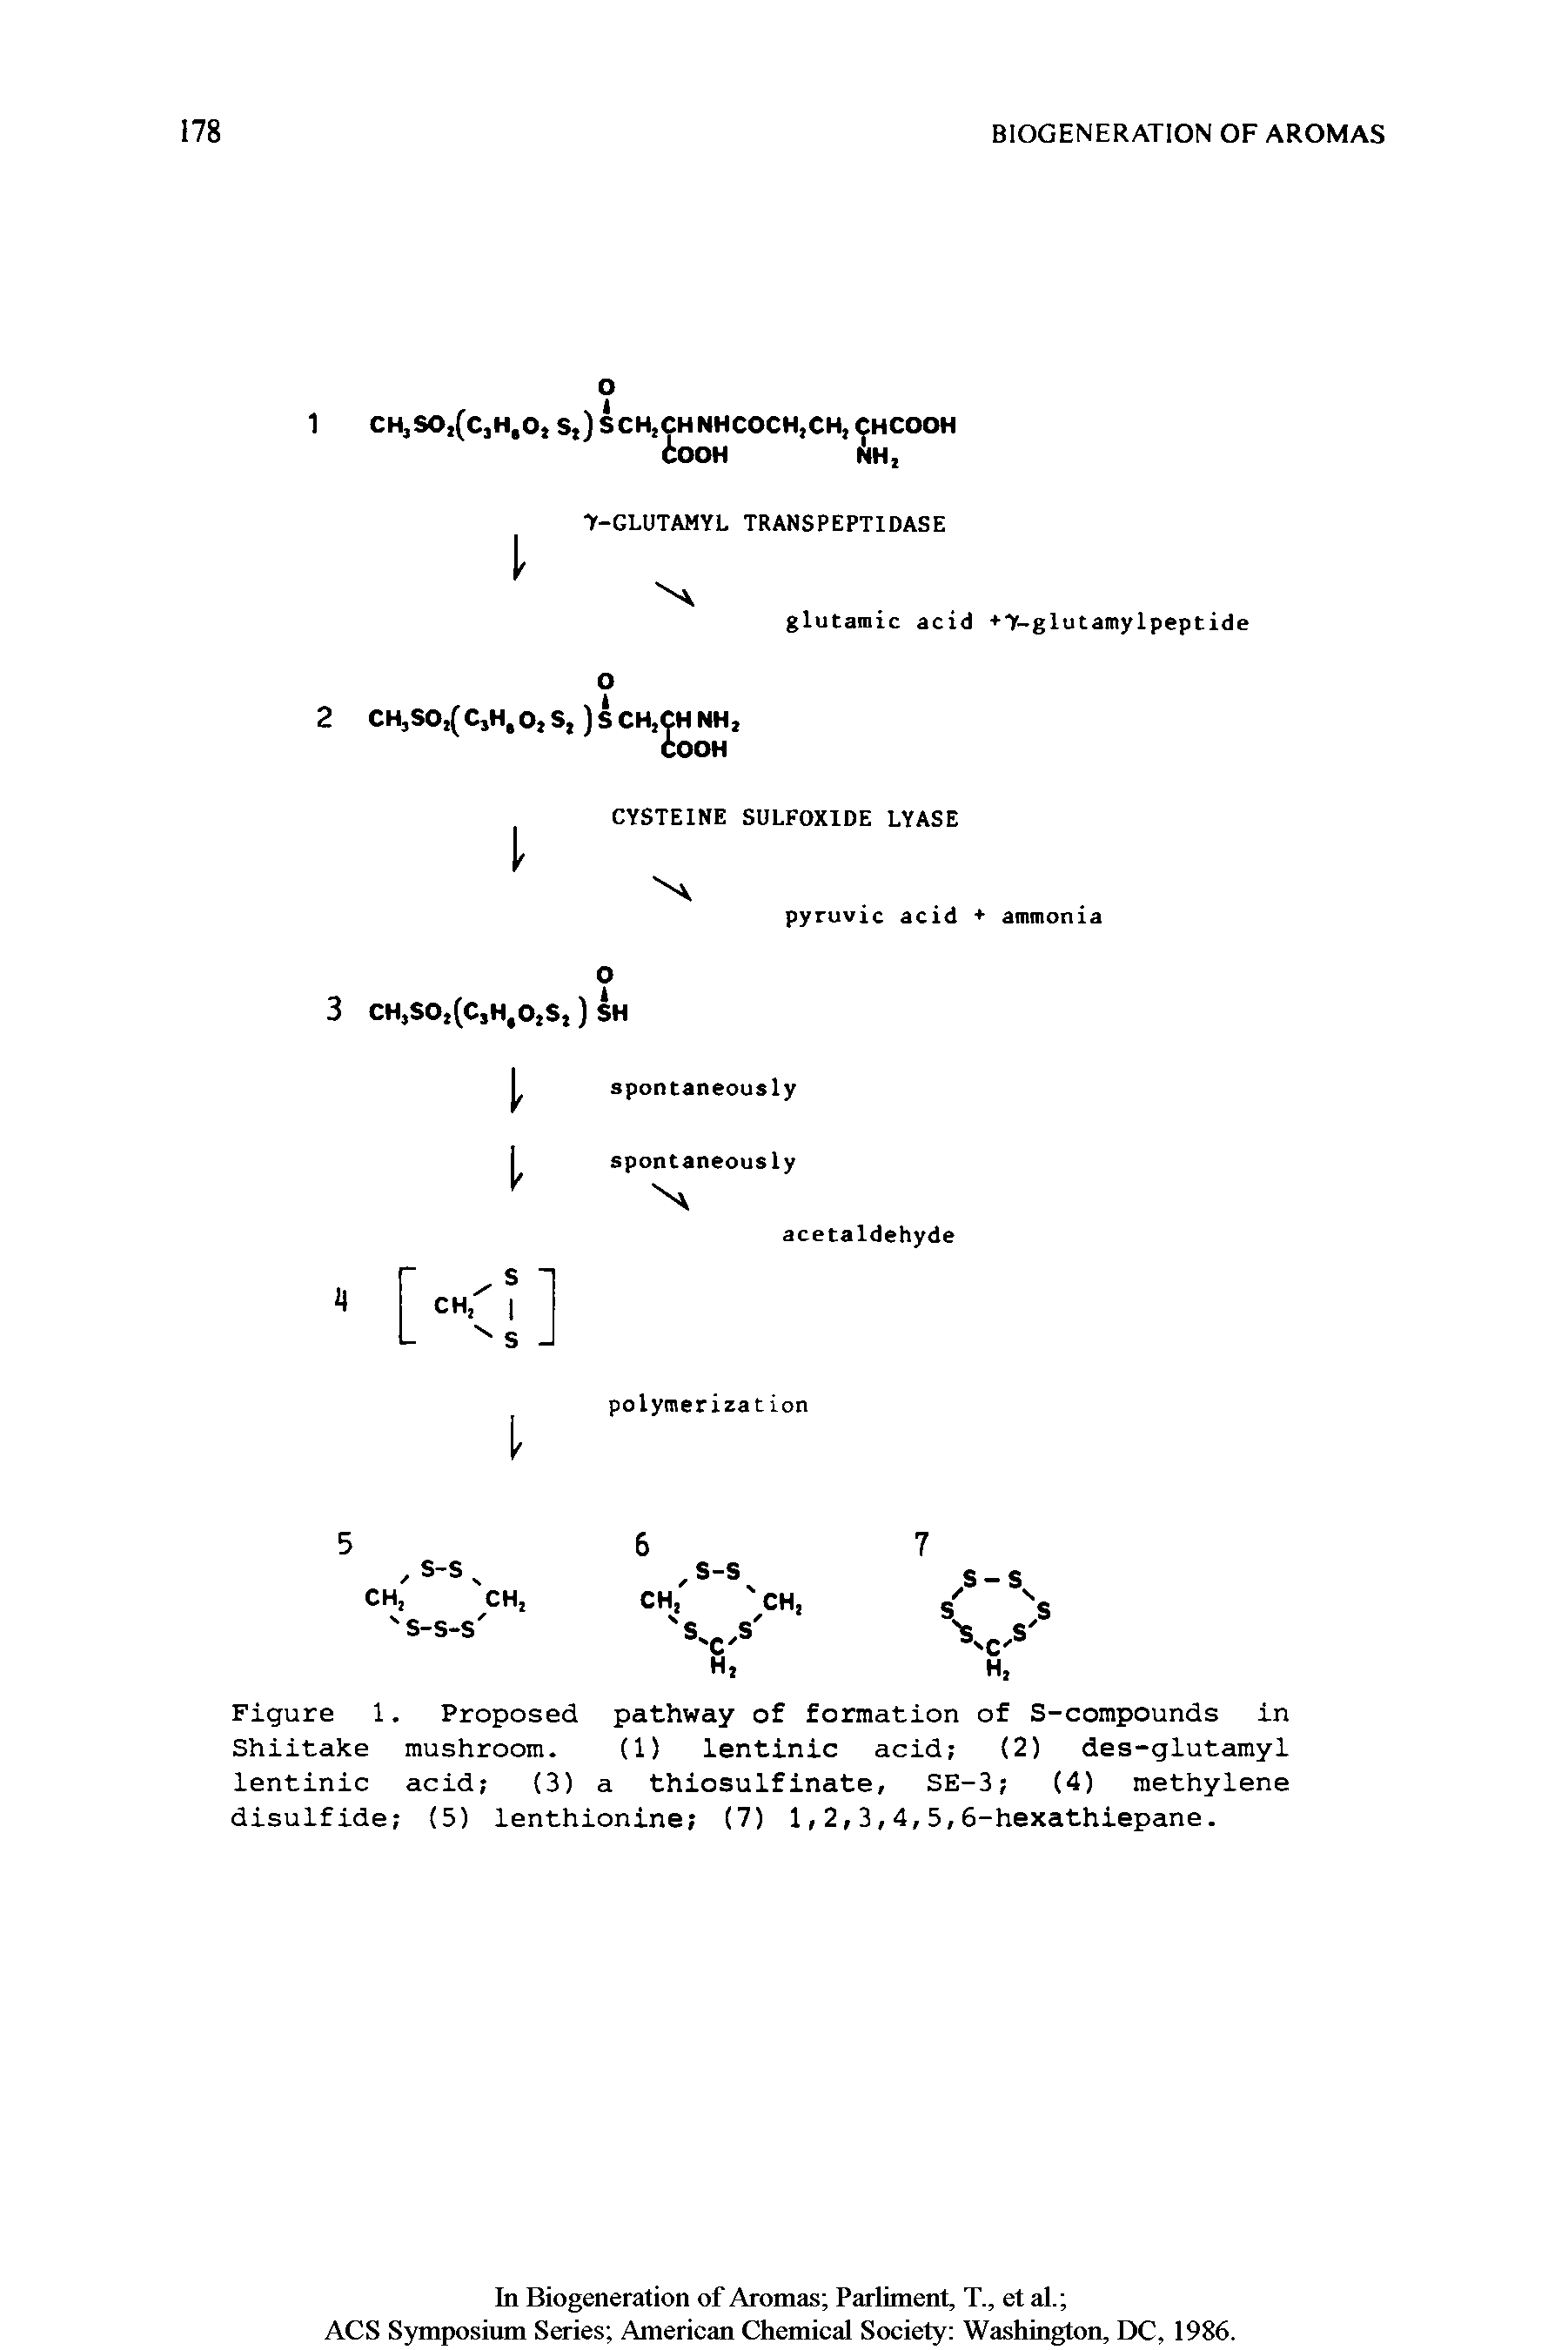 Figure 1. Proposed pathway of formation of S-compounds in Shiitake mushroom. (1) lentinic acid (2) des-glutamyl lentinic acid (3) a thiosulfinate, SE-3 (4) methylene disulfide (5) lenthionine (7) 1,2,3,4,5,6-hexathiepane.